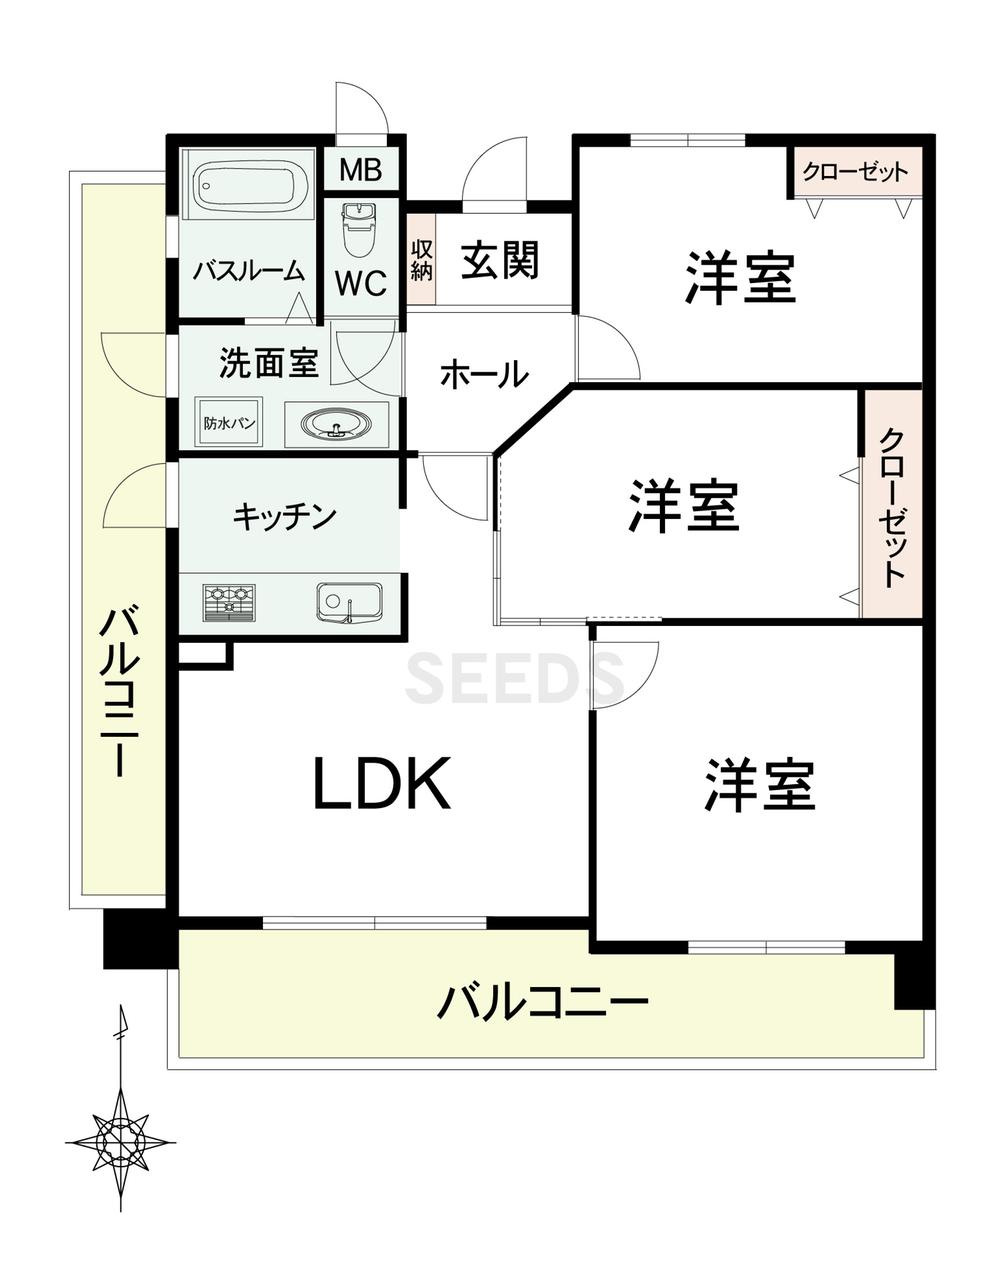 Floor plan. 3LDK, Price 31 million yen, Occupied area 75.19 sq m , Balcony area 23.12 sq m